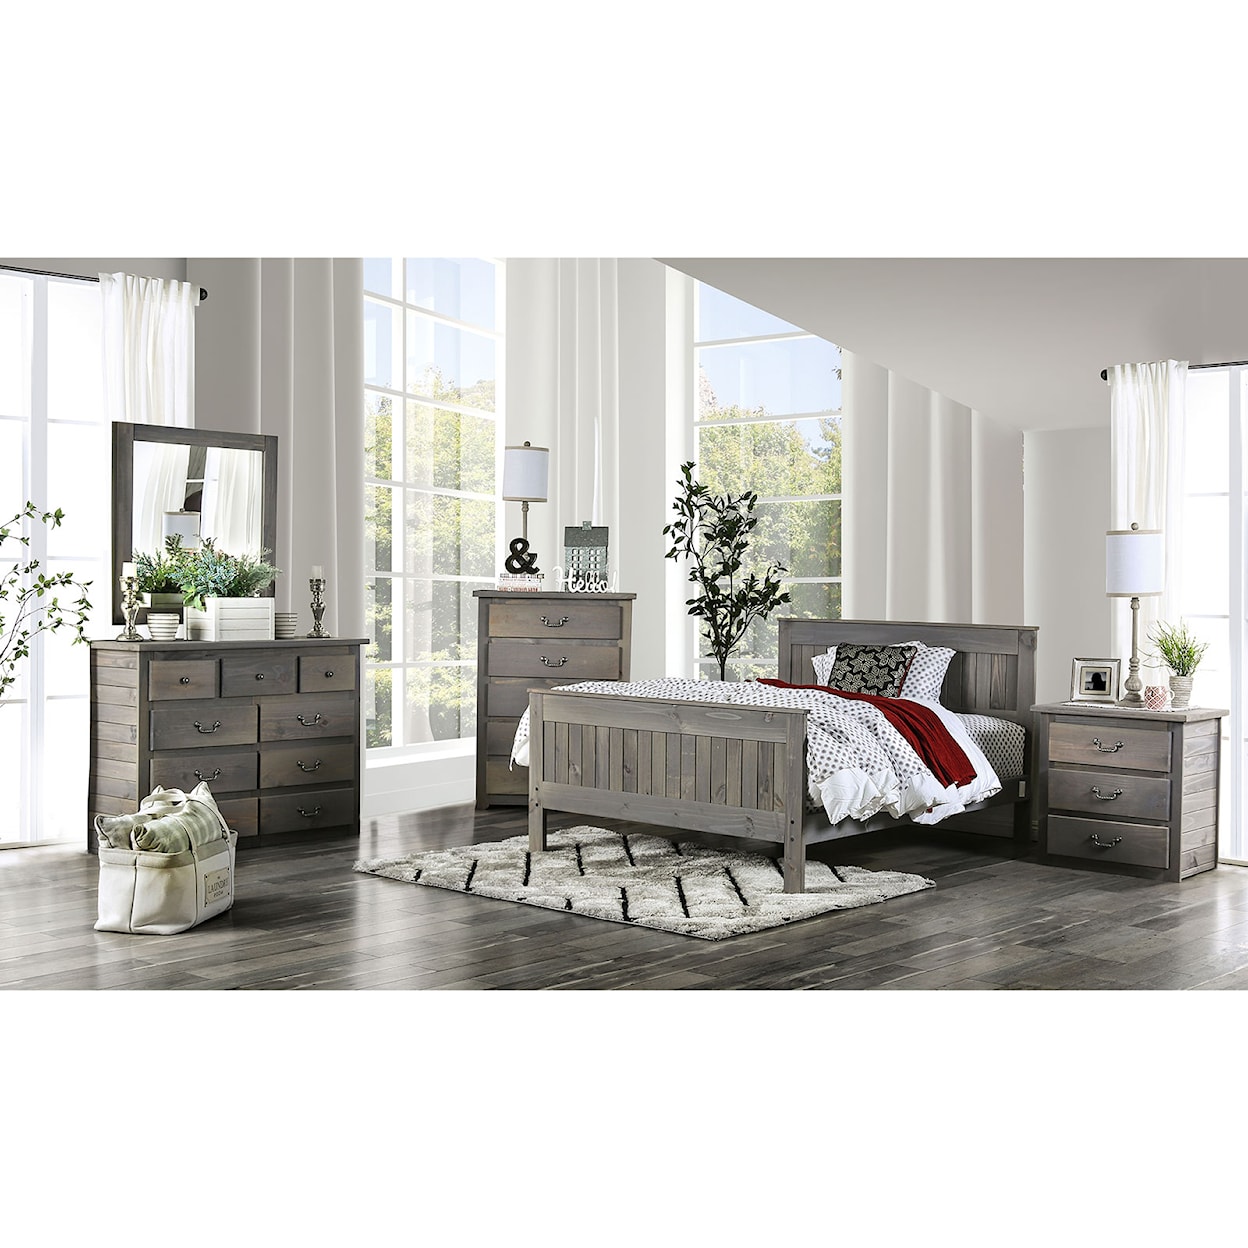 Furniture of America Rockwall 4-Piece Full Bedroom Set